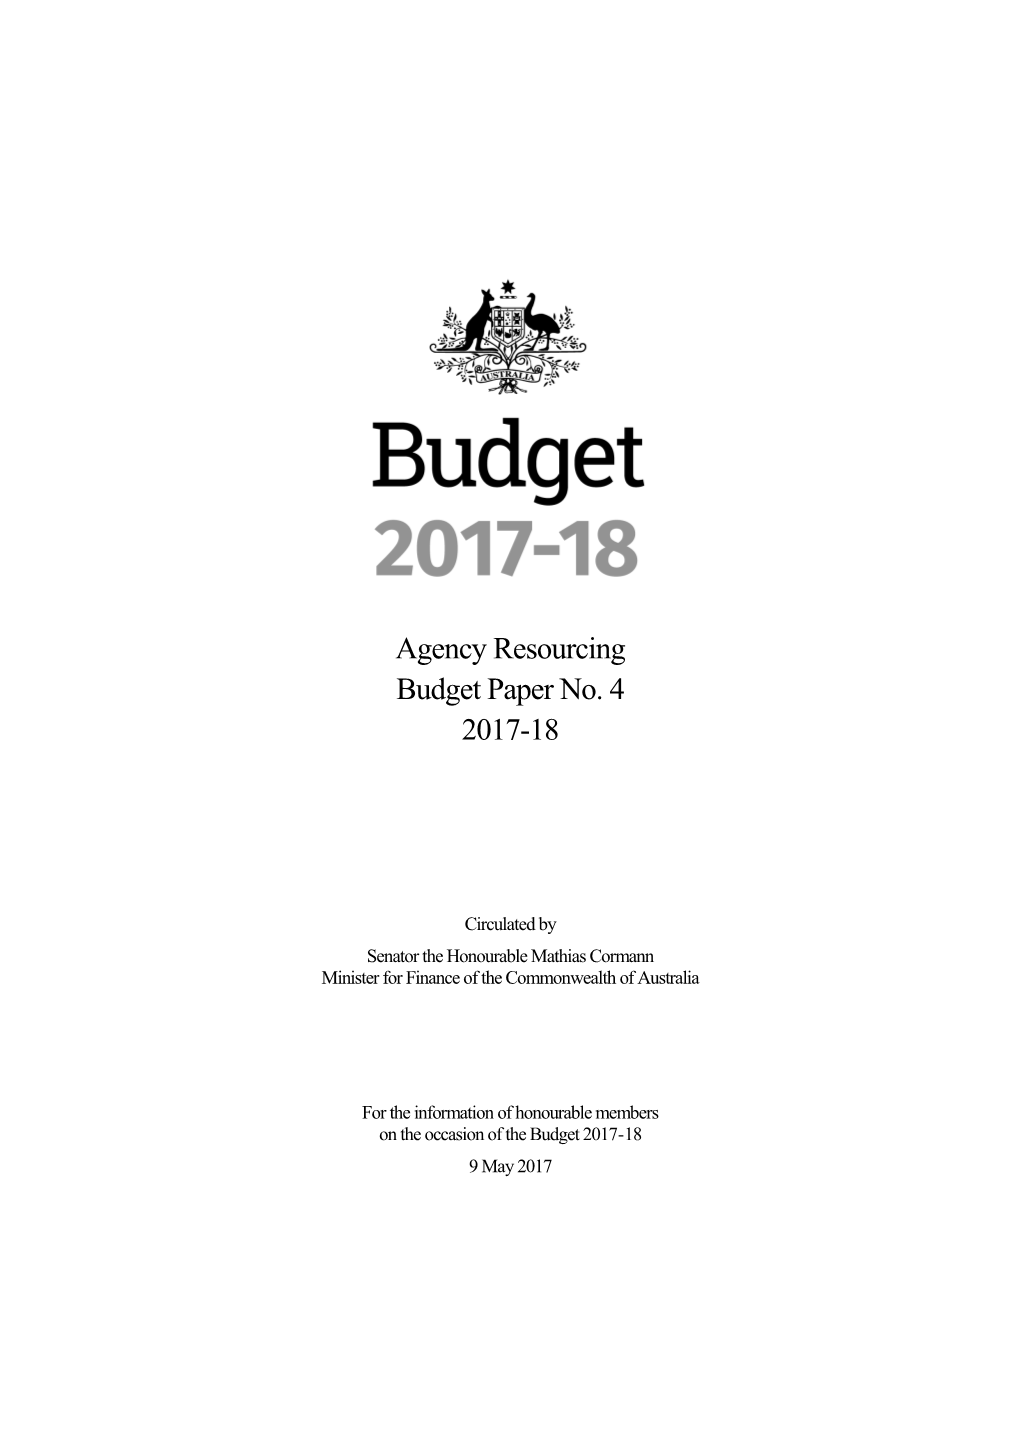 Budget 2017-18 - Agency Resourcing, Budget Paper No. 4